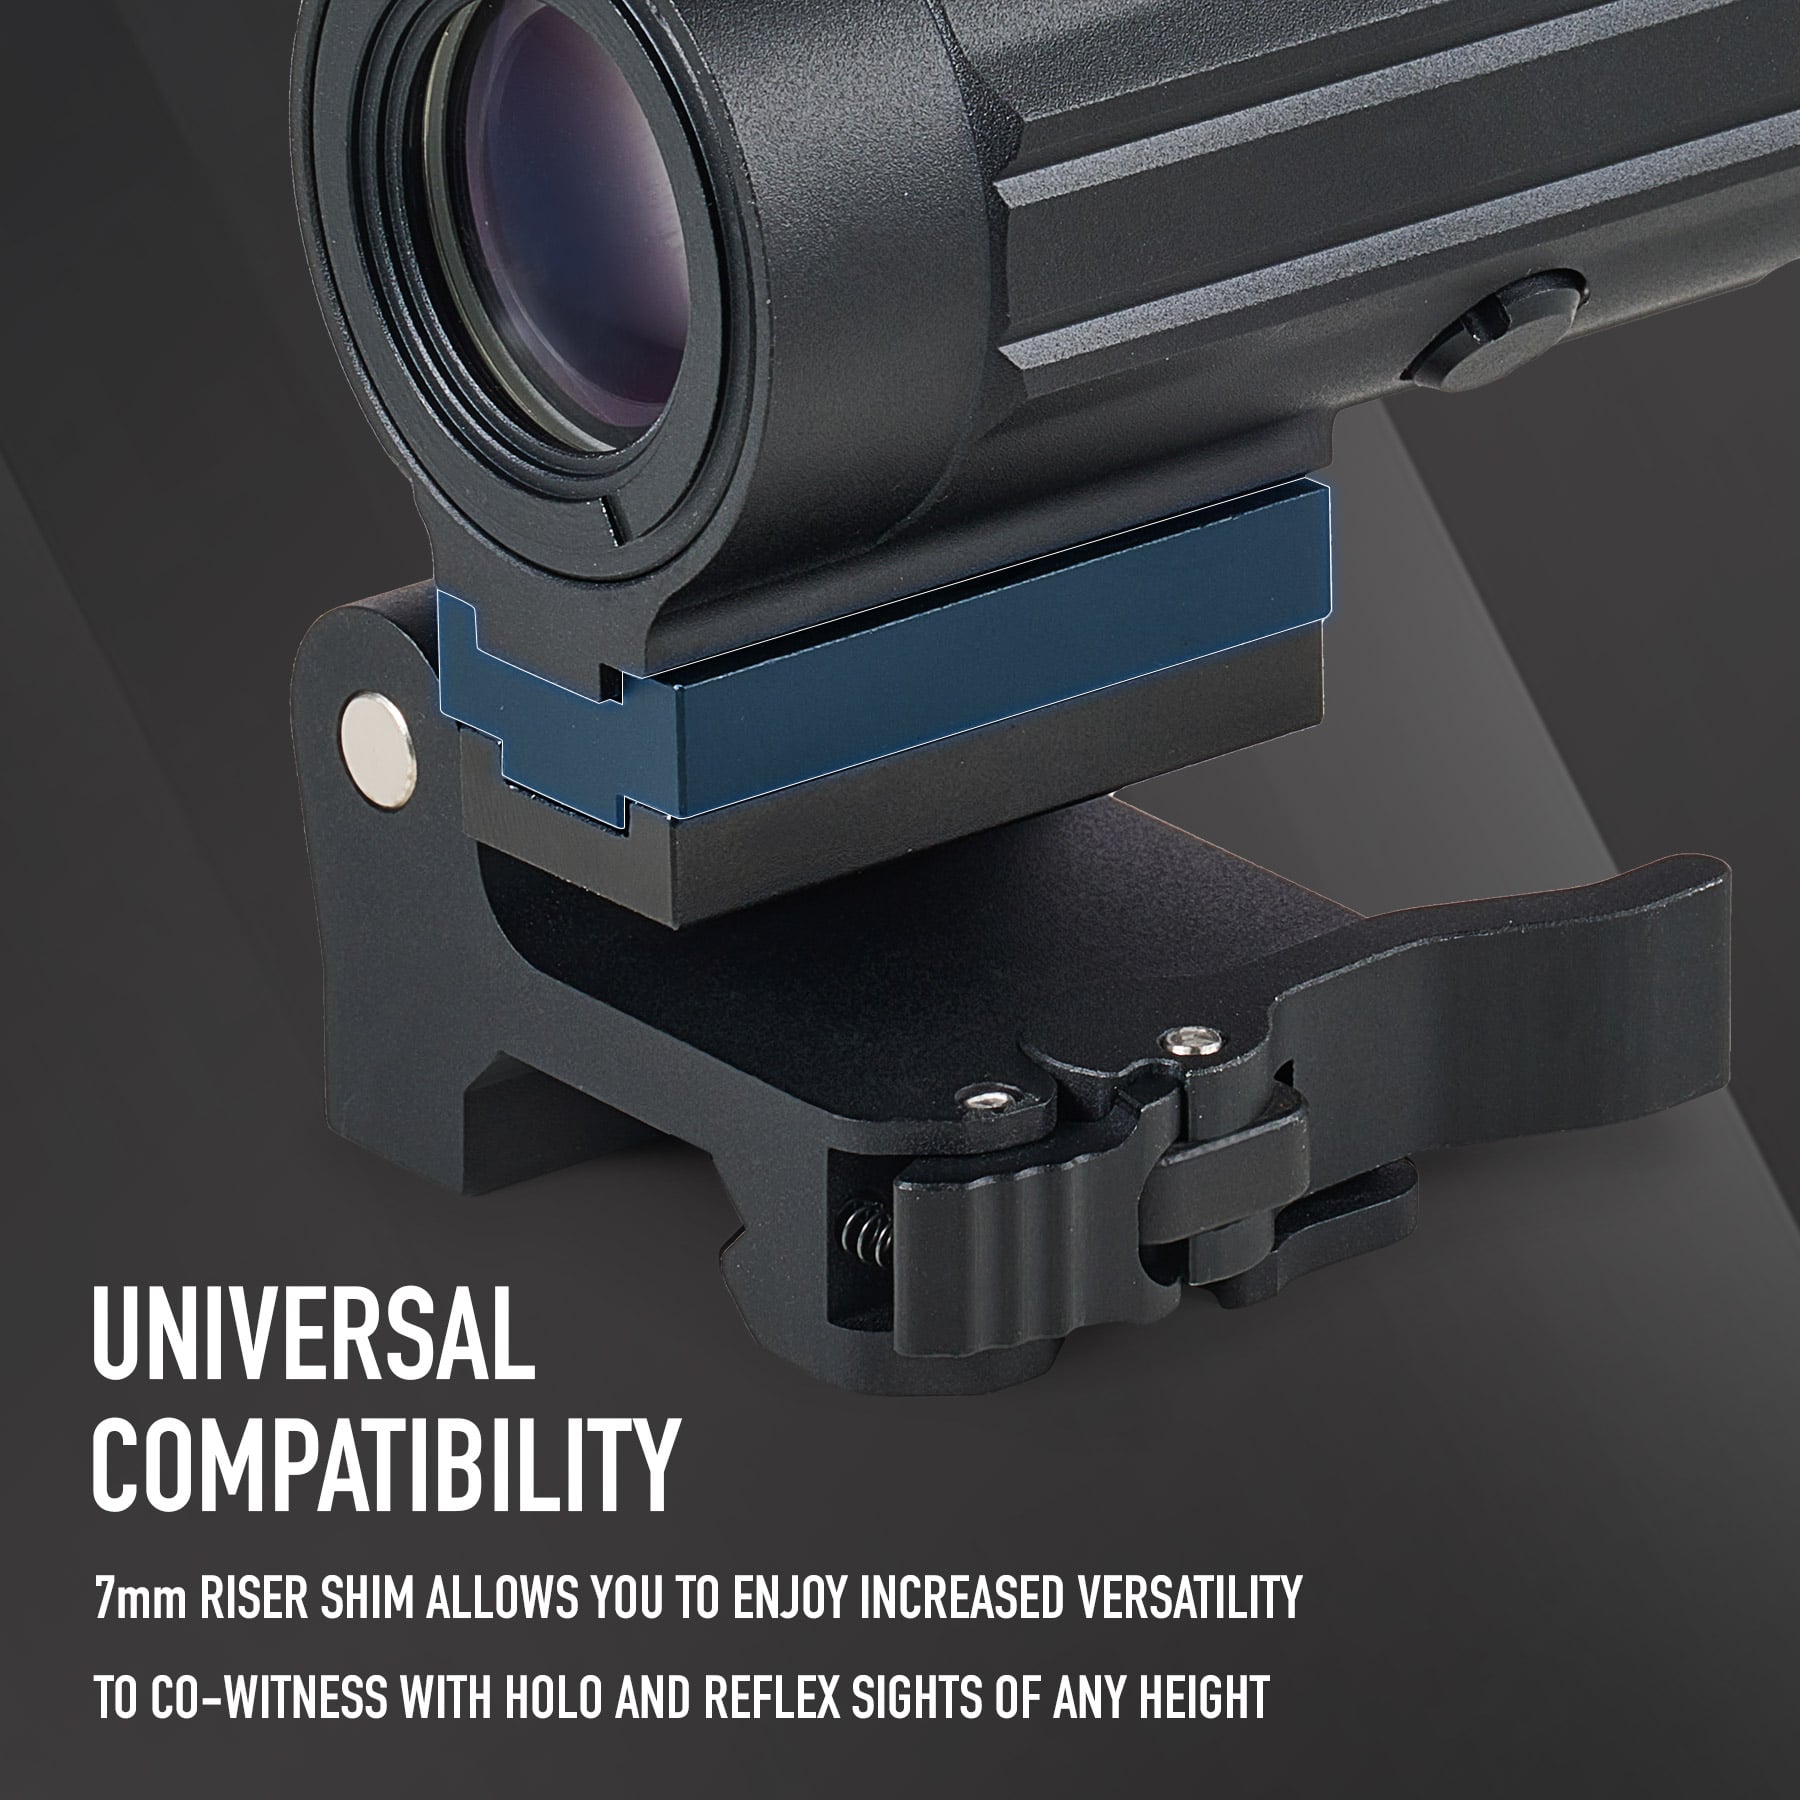 night-vision-monocular-crossbow-pistol-leupold-scope-bushnell-binoculars-ar-15-glock-accessories